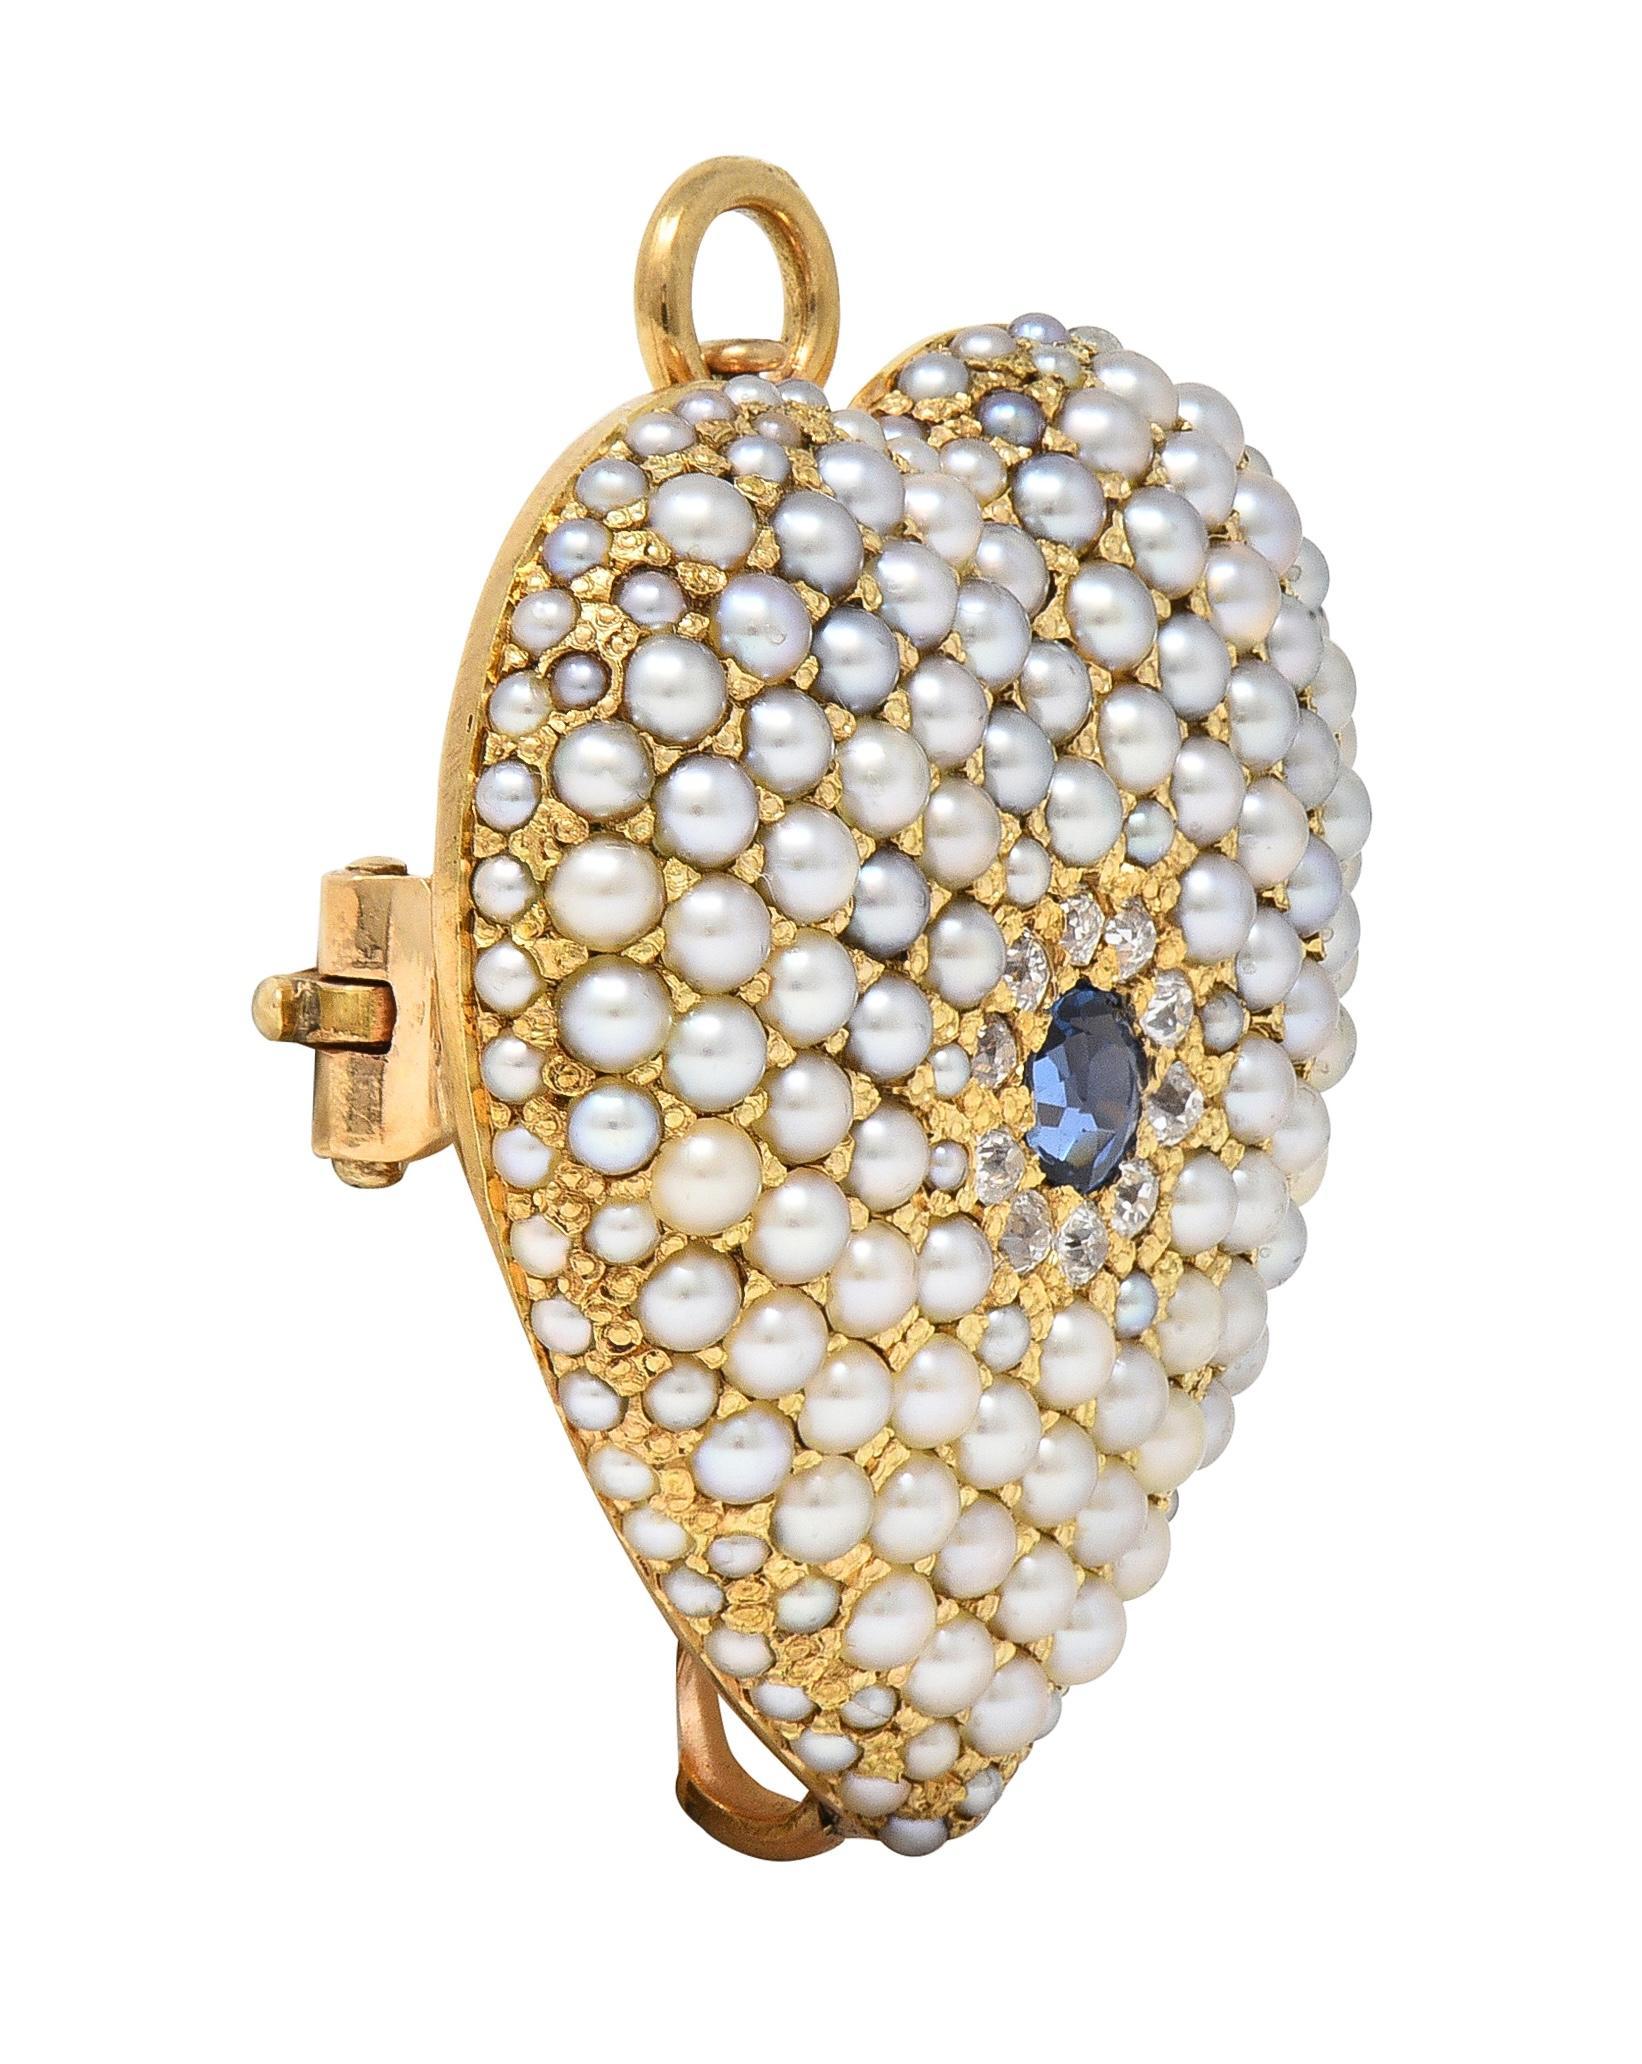 Riker Brothers Victorian Sapphire Diamond 14 Karat Gold Heart Pendant Brooch 1